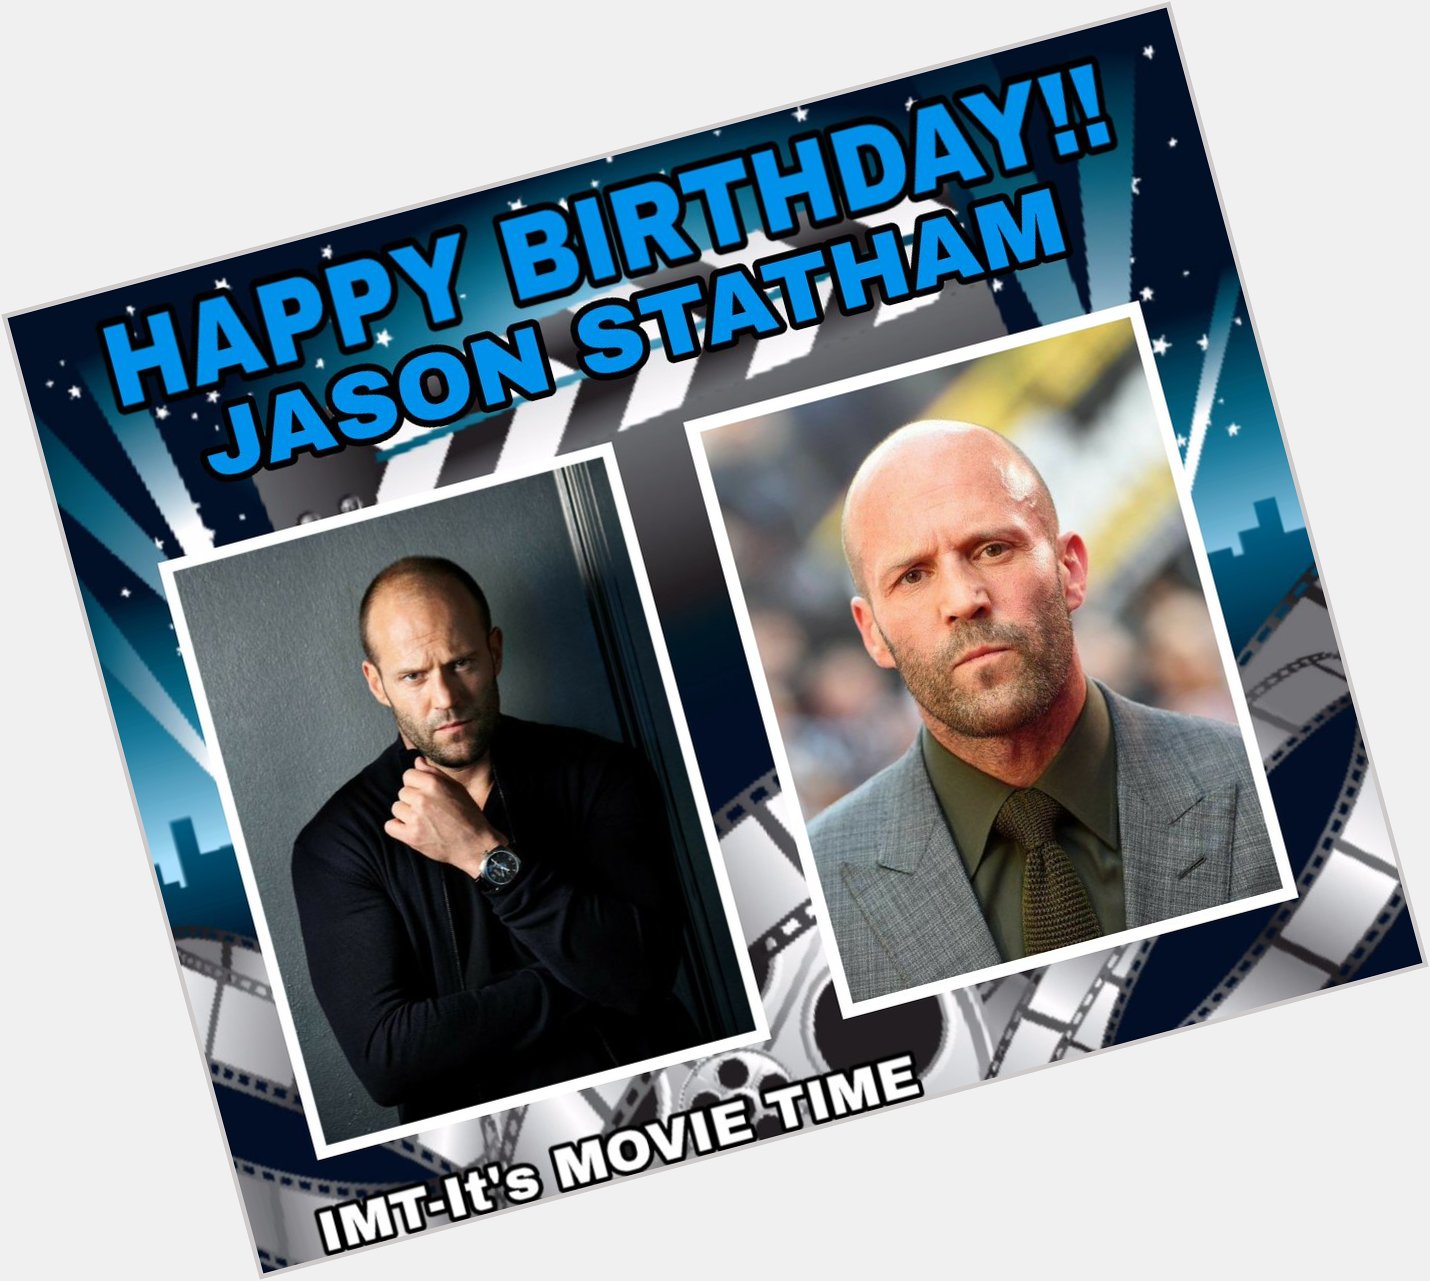 Happy Birthday to Jason Statham! He is celebrating 53 years. 